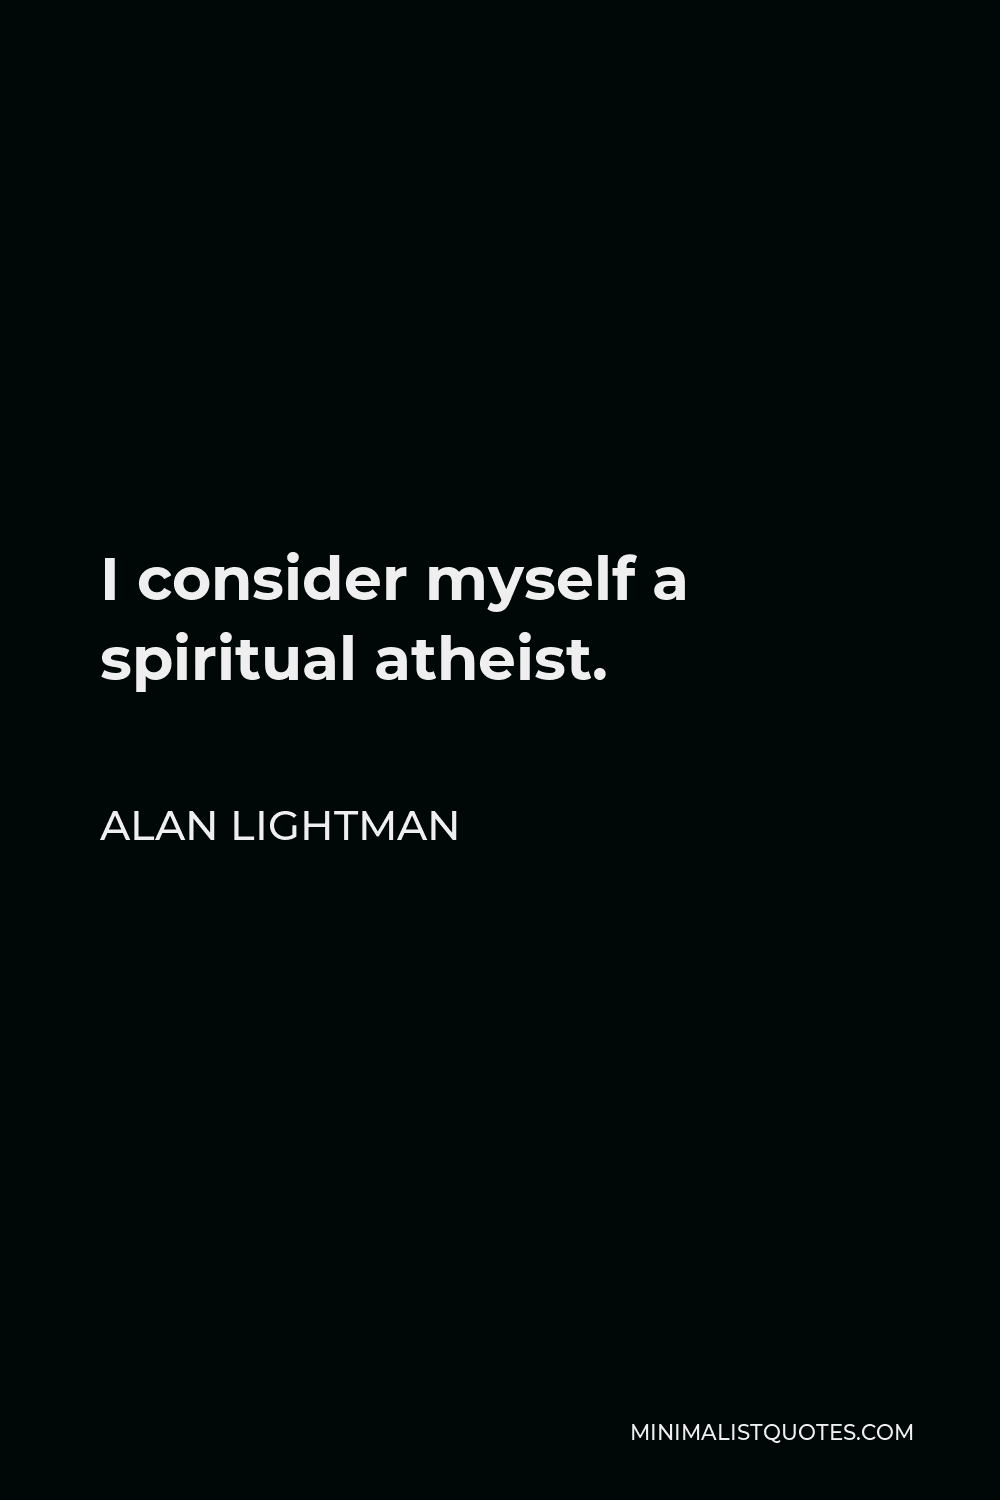 Alan Lightman Quote - I consider myself a spiritual atheist.